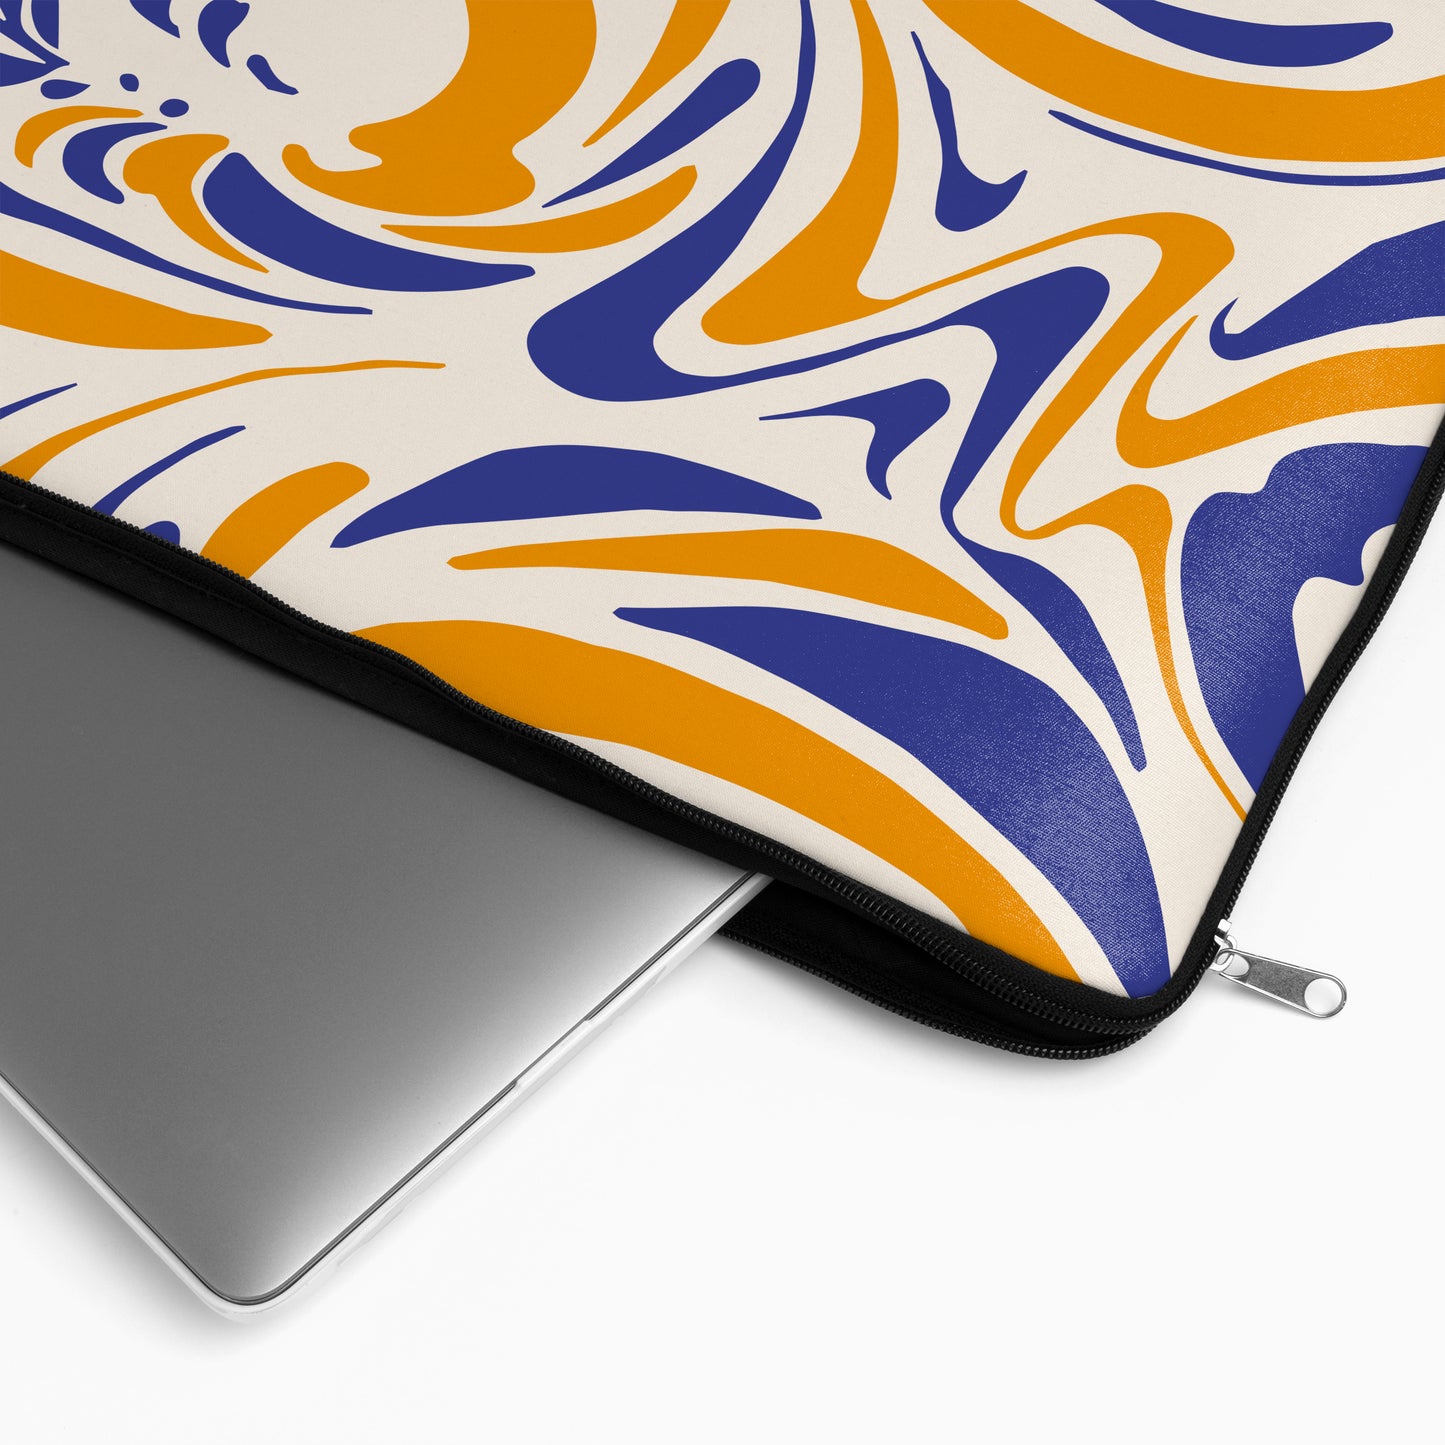 Blue and yellow liquid art MacBook Sleeve